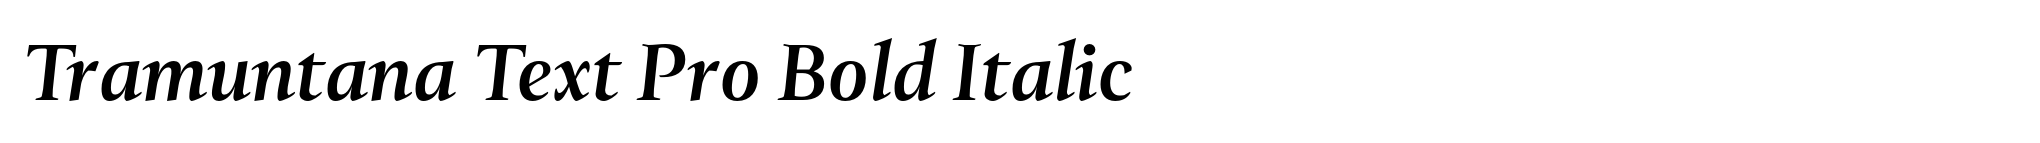 Tramuntana Text Pro Bold Italic image